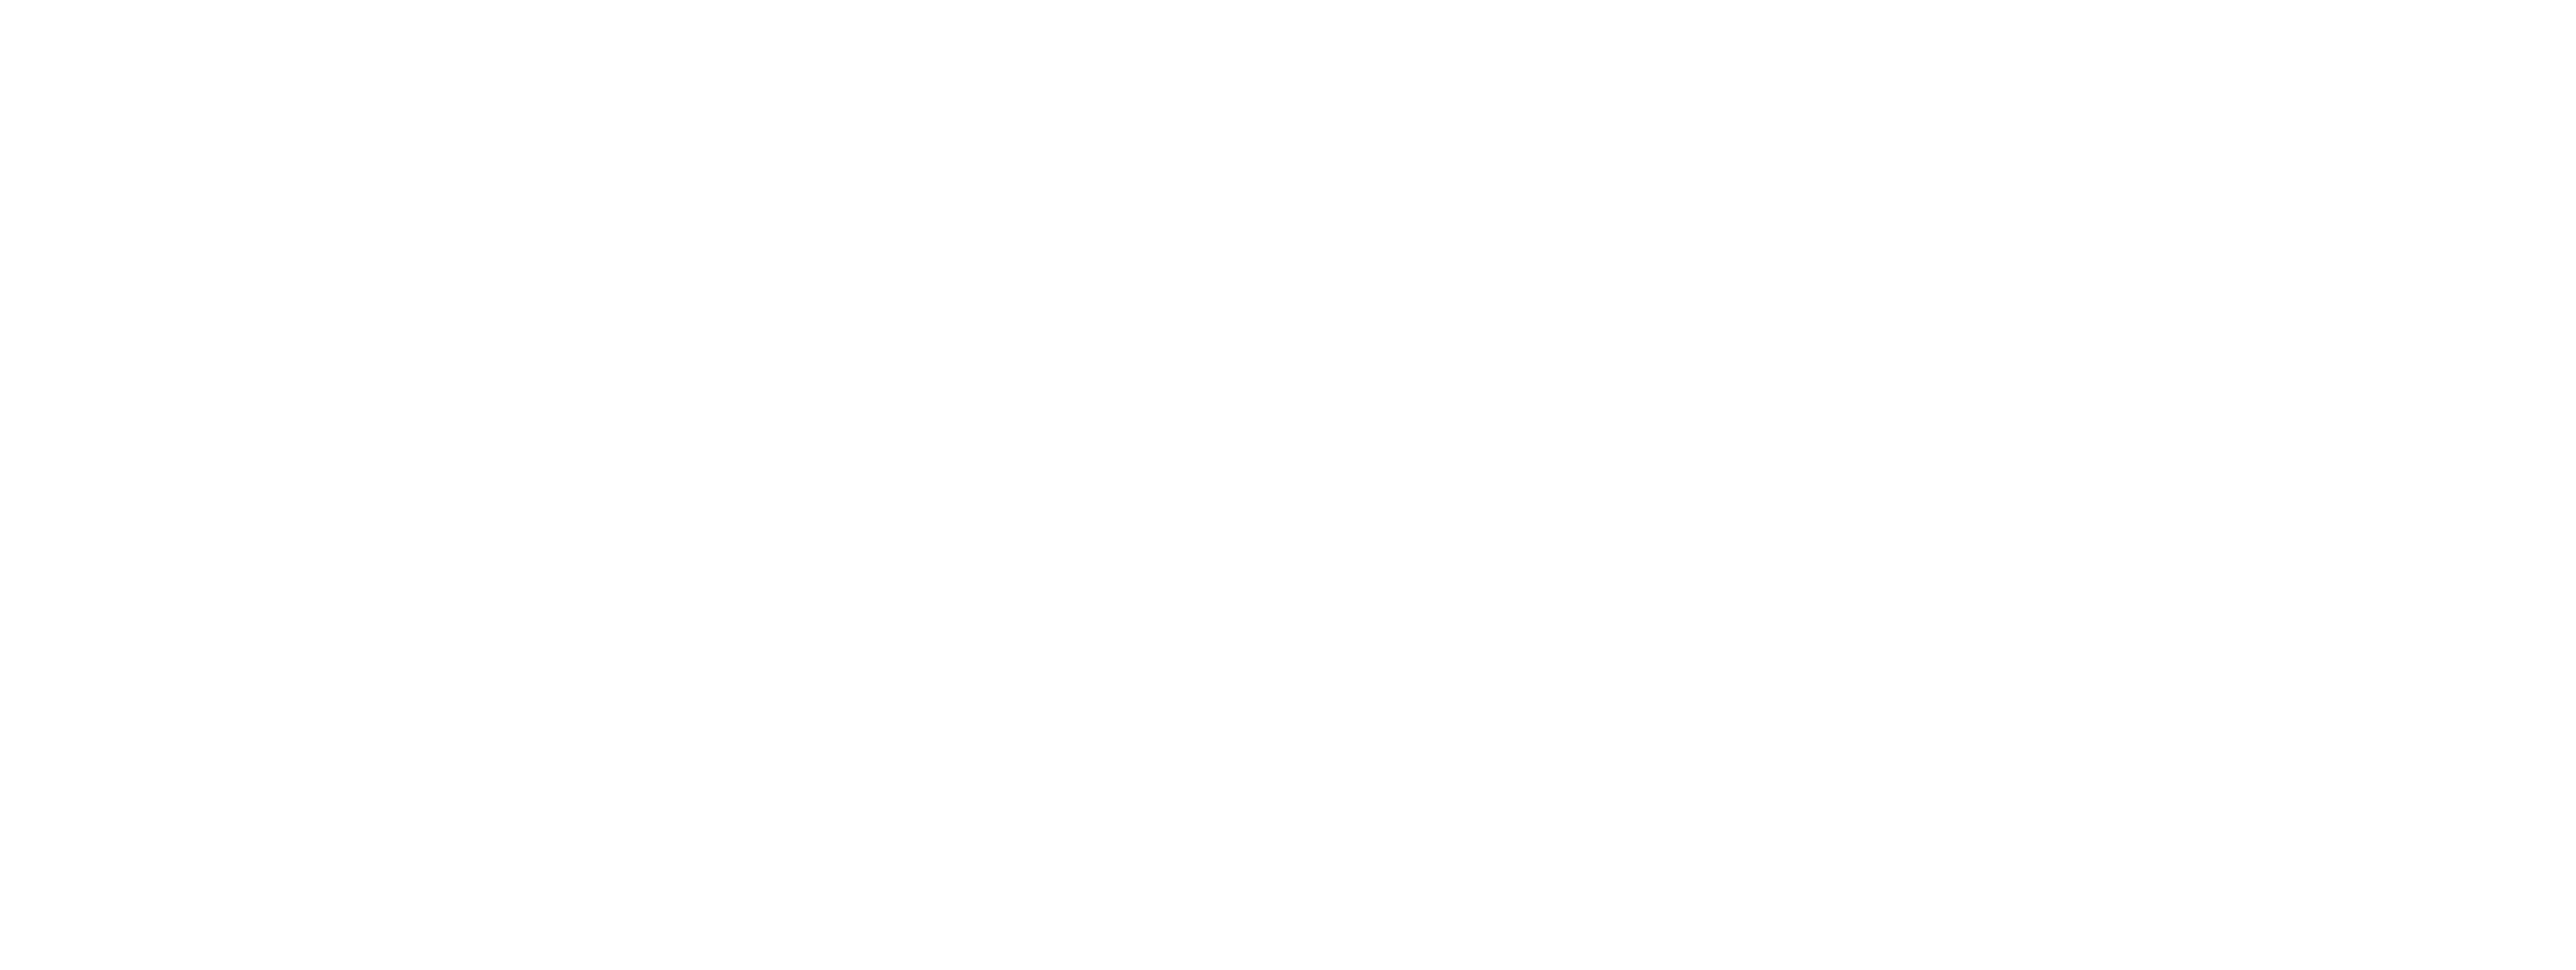 Trek Bicycle Kingston Home Page